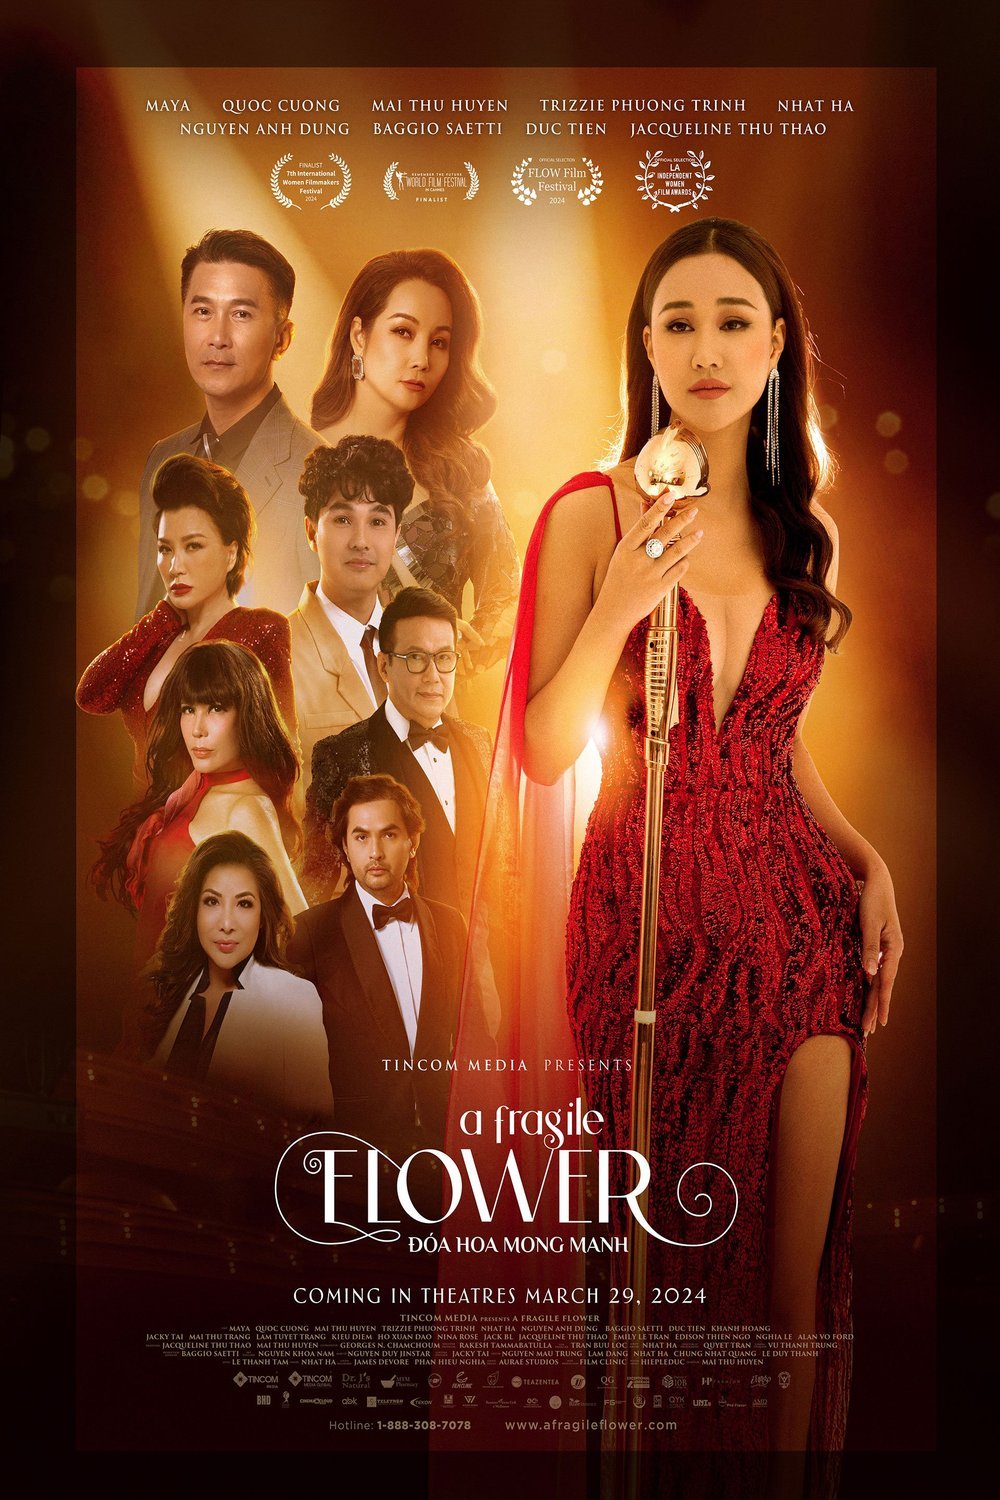 Vietnamese poster of the movie Doa Hoa Mong Manh